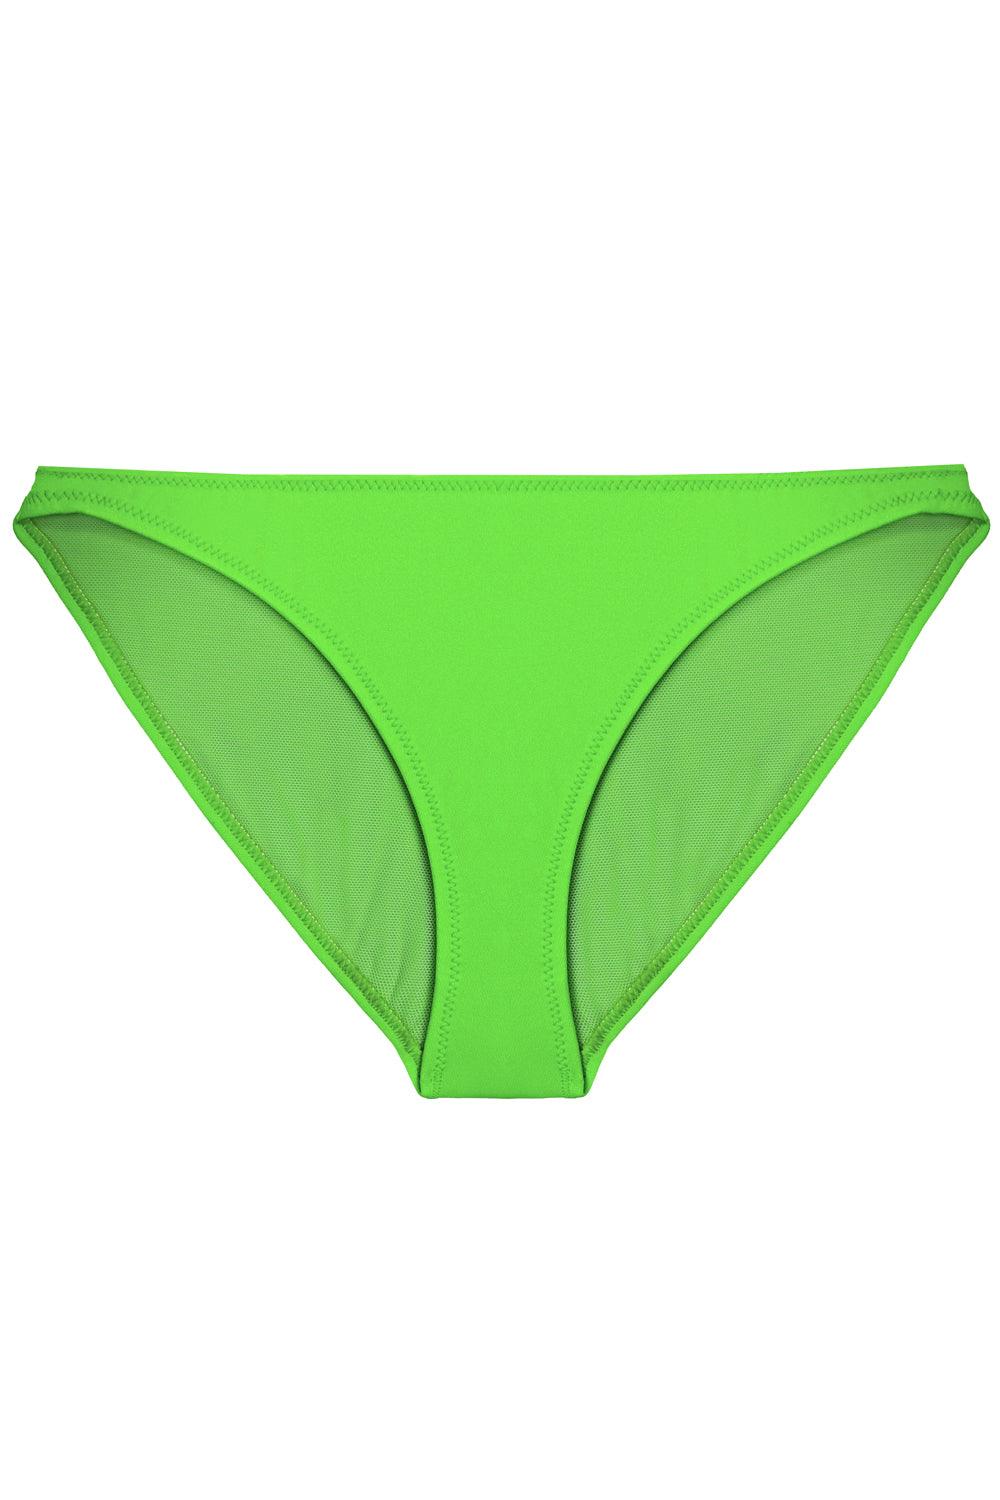 Tonic Greenery bikini bottom - yesUndress